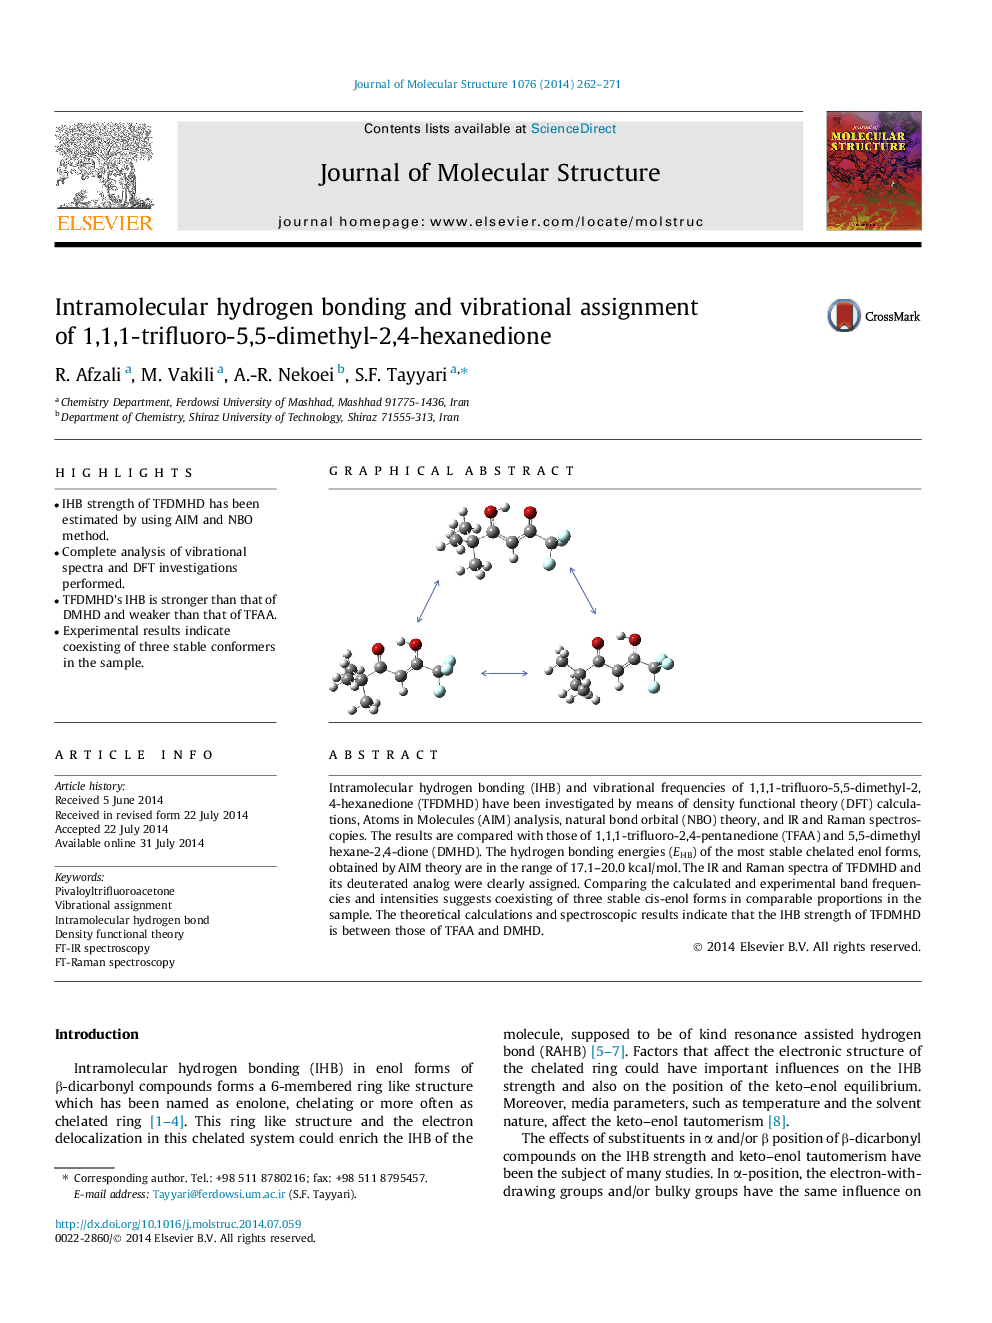 Intramolecular hydrogen bonding and vibrational assignment of 1,1,1-trifluoro-5,5-dimethyl-2,4-hexanedione